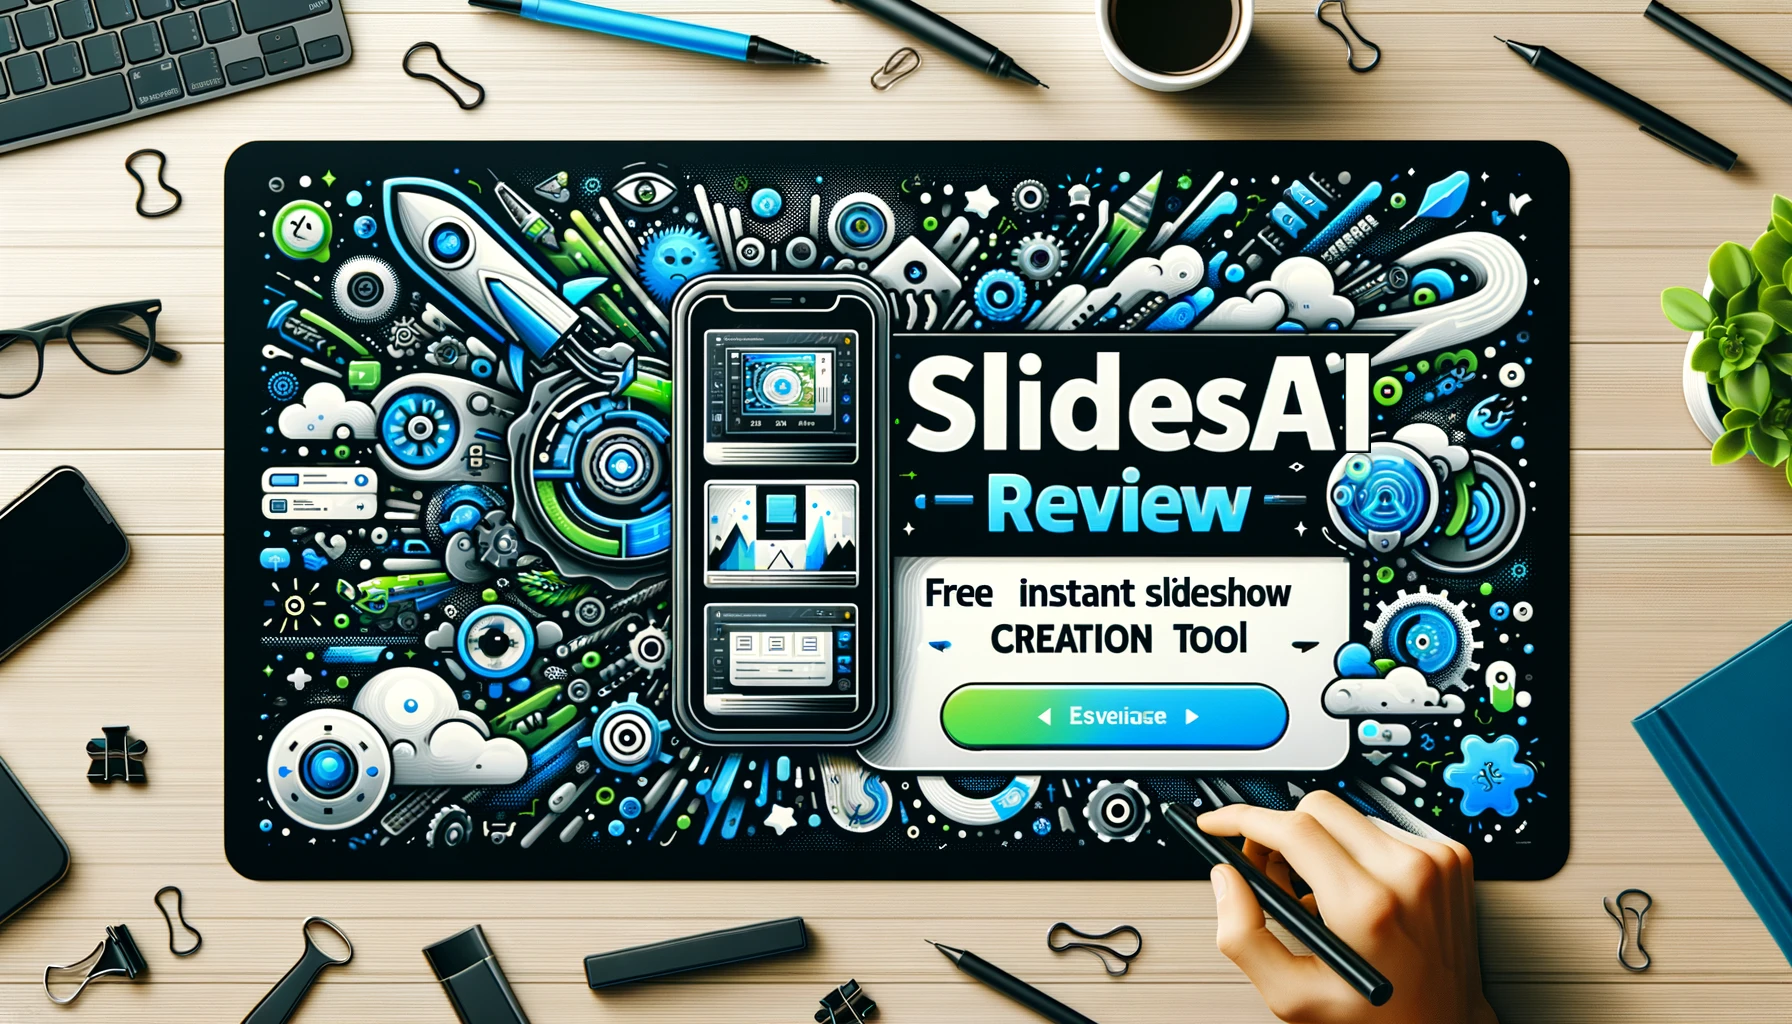 SlidesAI Review - Free Instant Slideshow Creation Tool